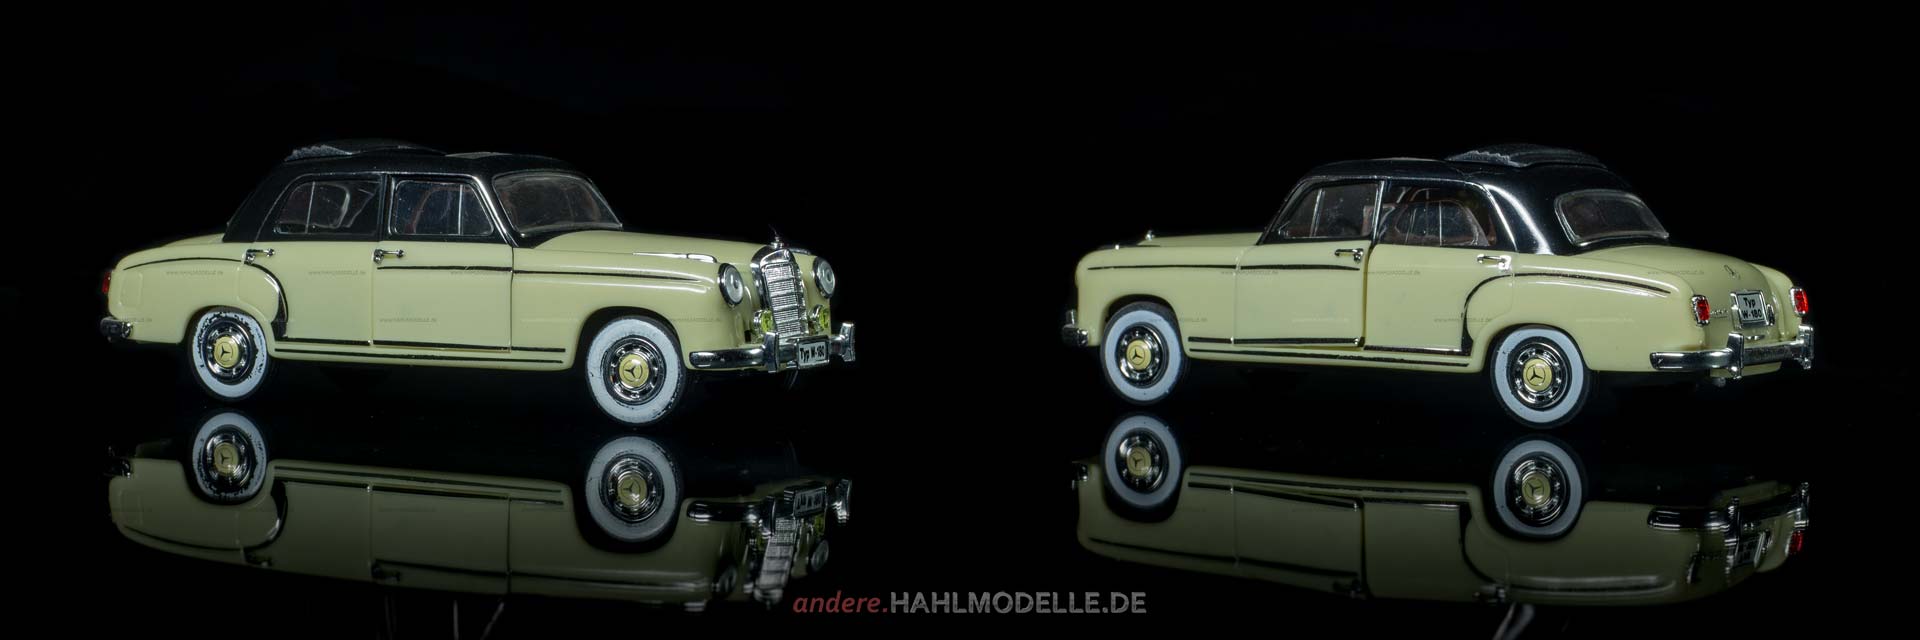 Mercedes-Benz 220 S (W 180 II) | Limousine | Faller | www.andere.hahlmodelle.de